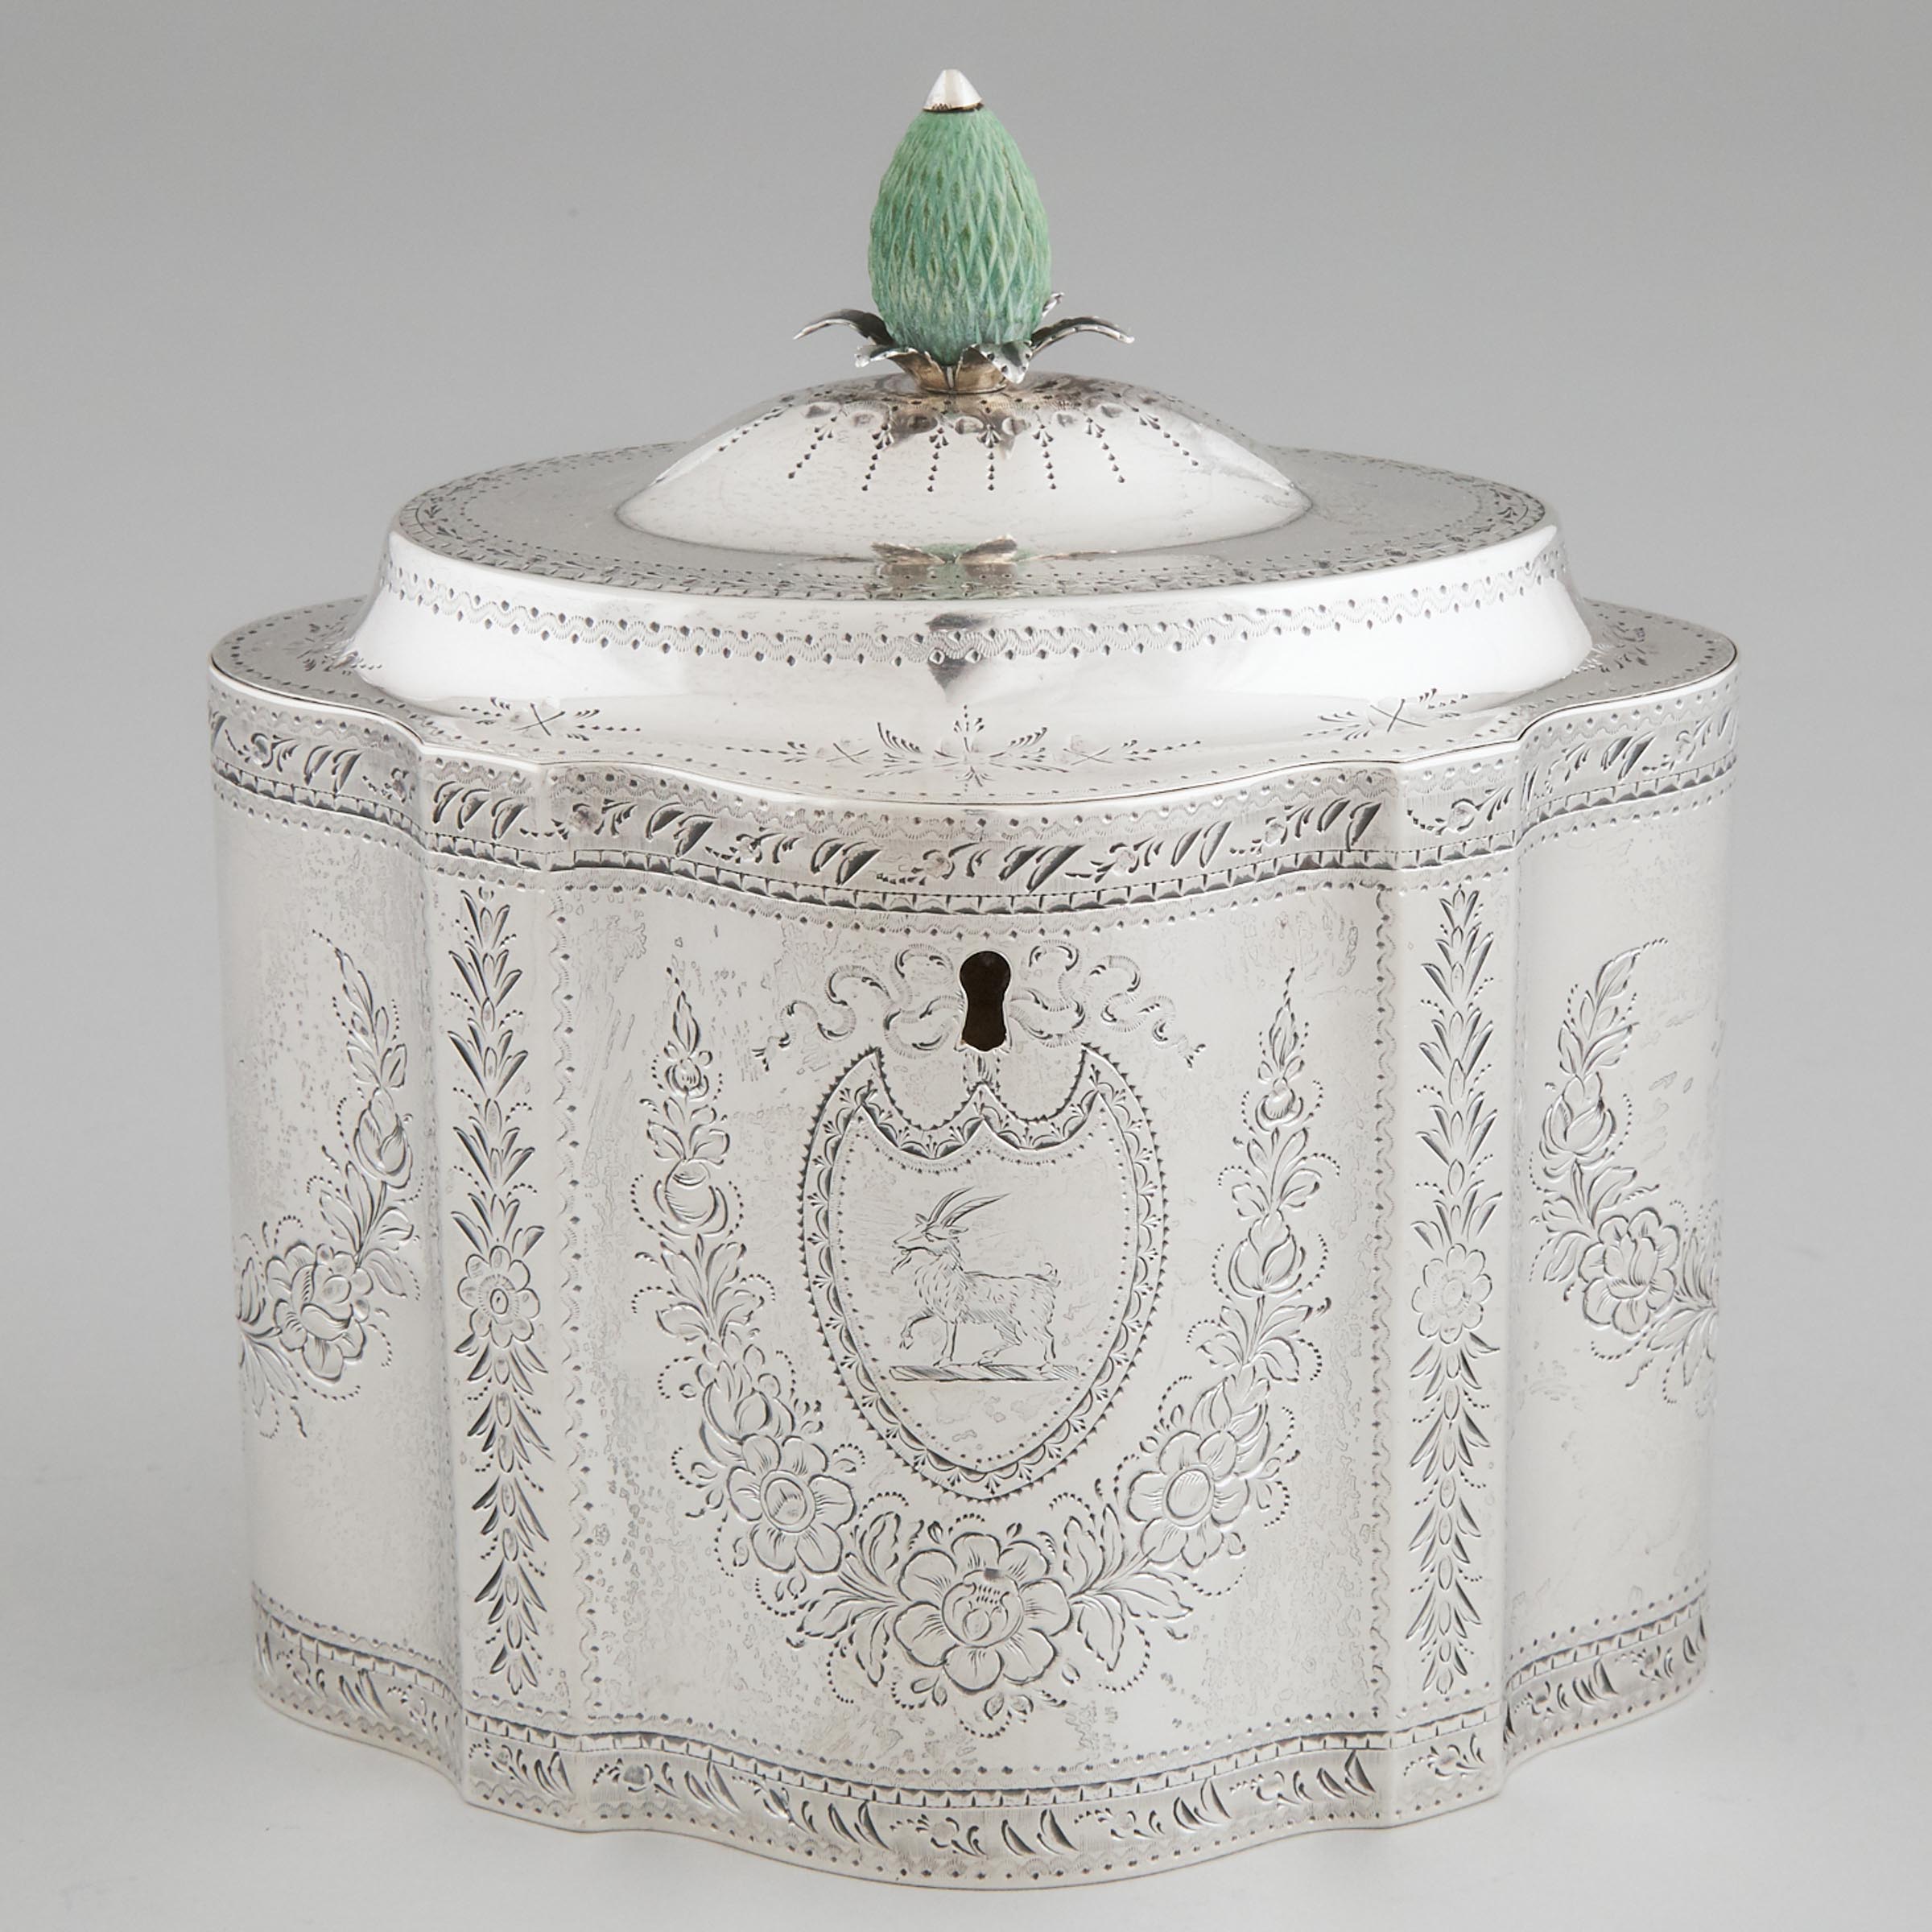 George III Silver Bright-Cut Straight-Sided Shaped Oval Tea Caddy, Thomas Chawner, London, 1786